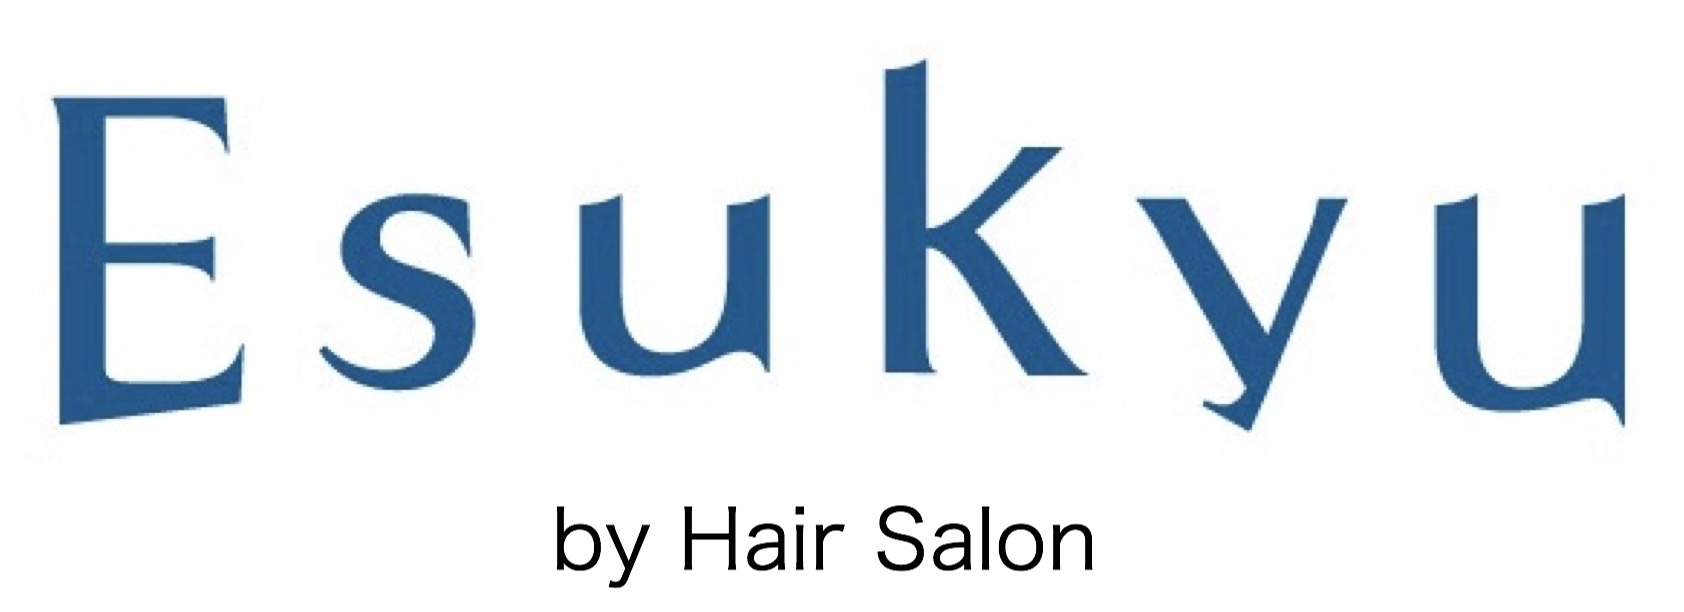 Esukyu by Hair Salon